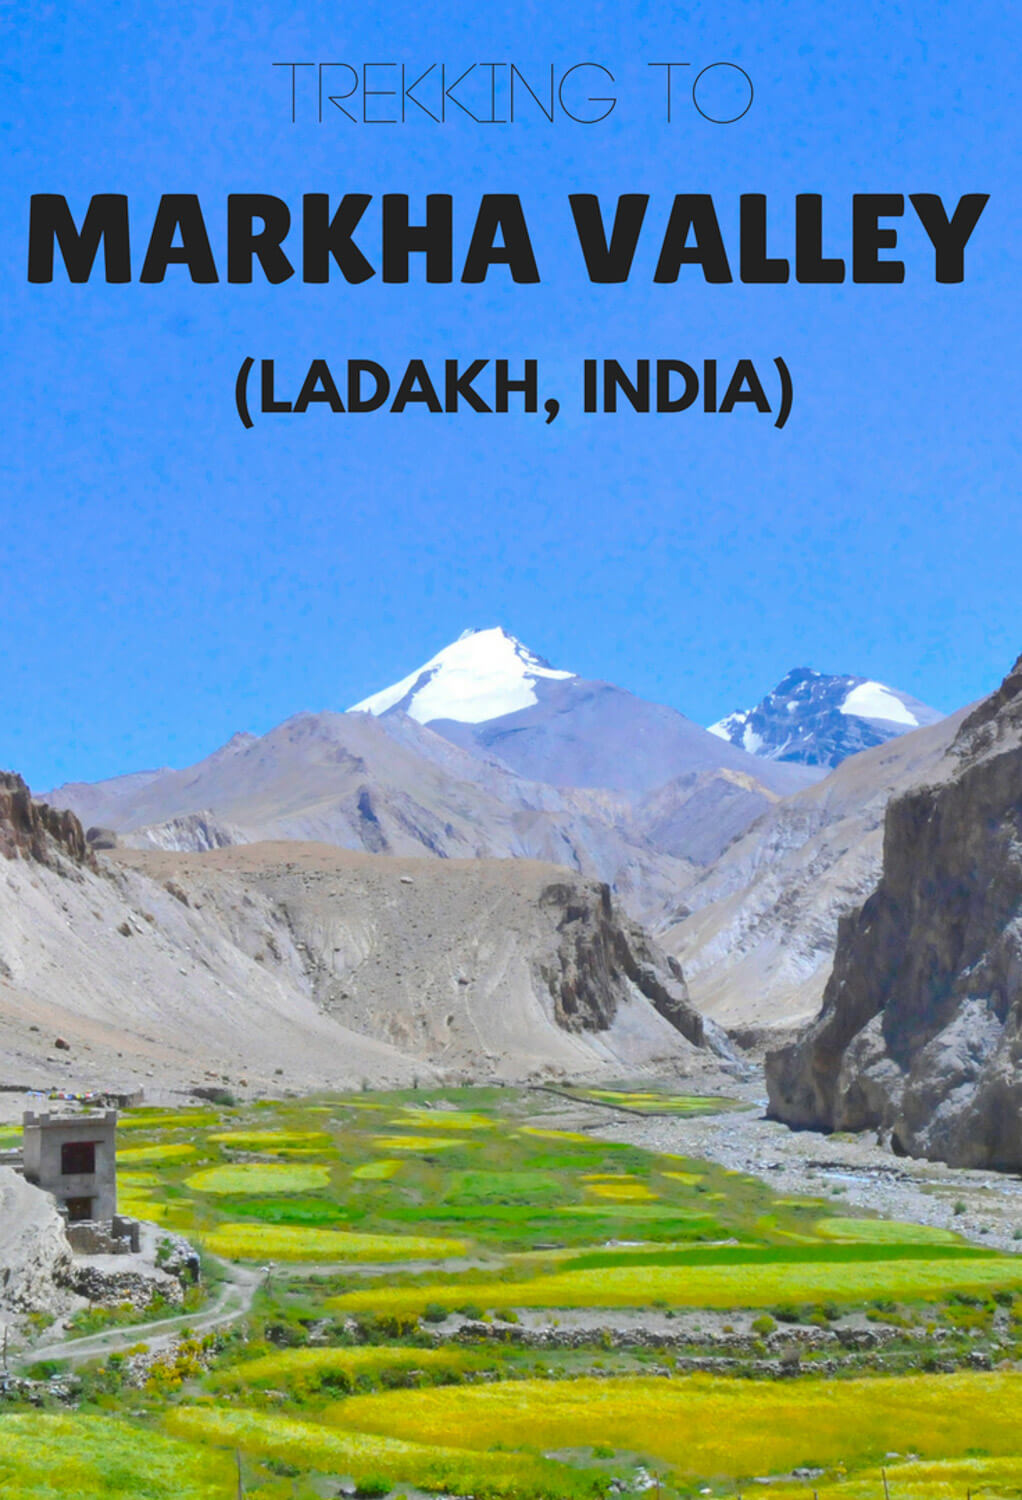 markha valley trek difficulty